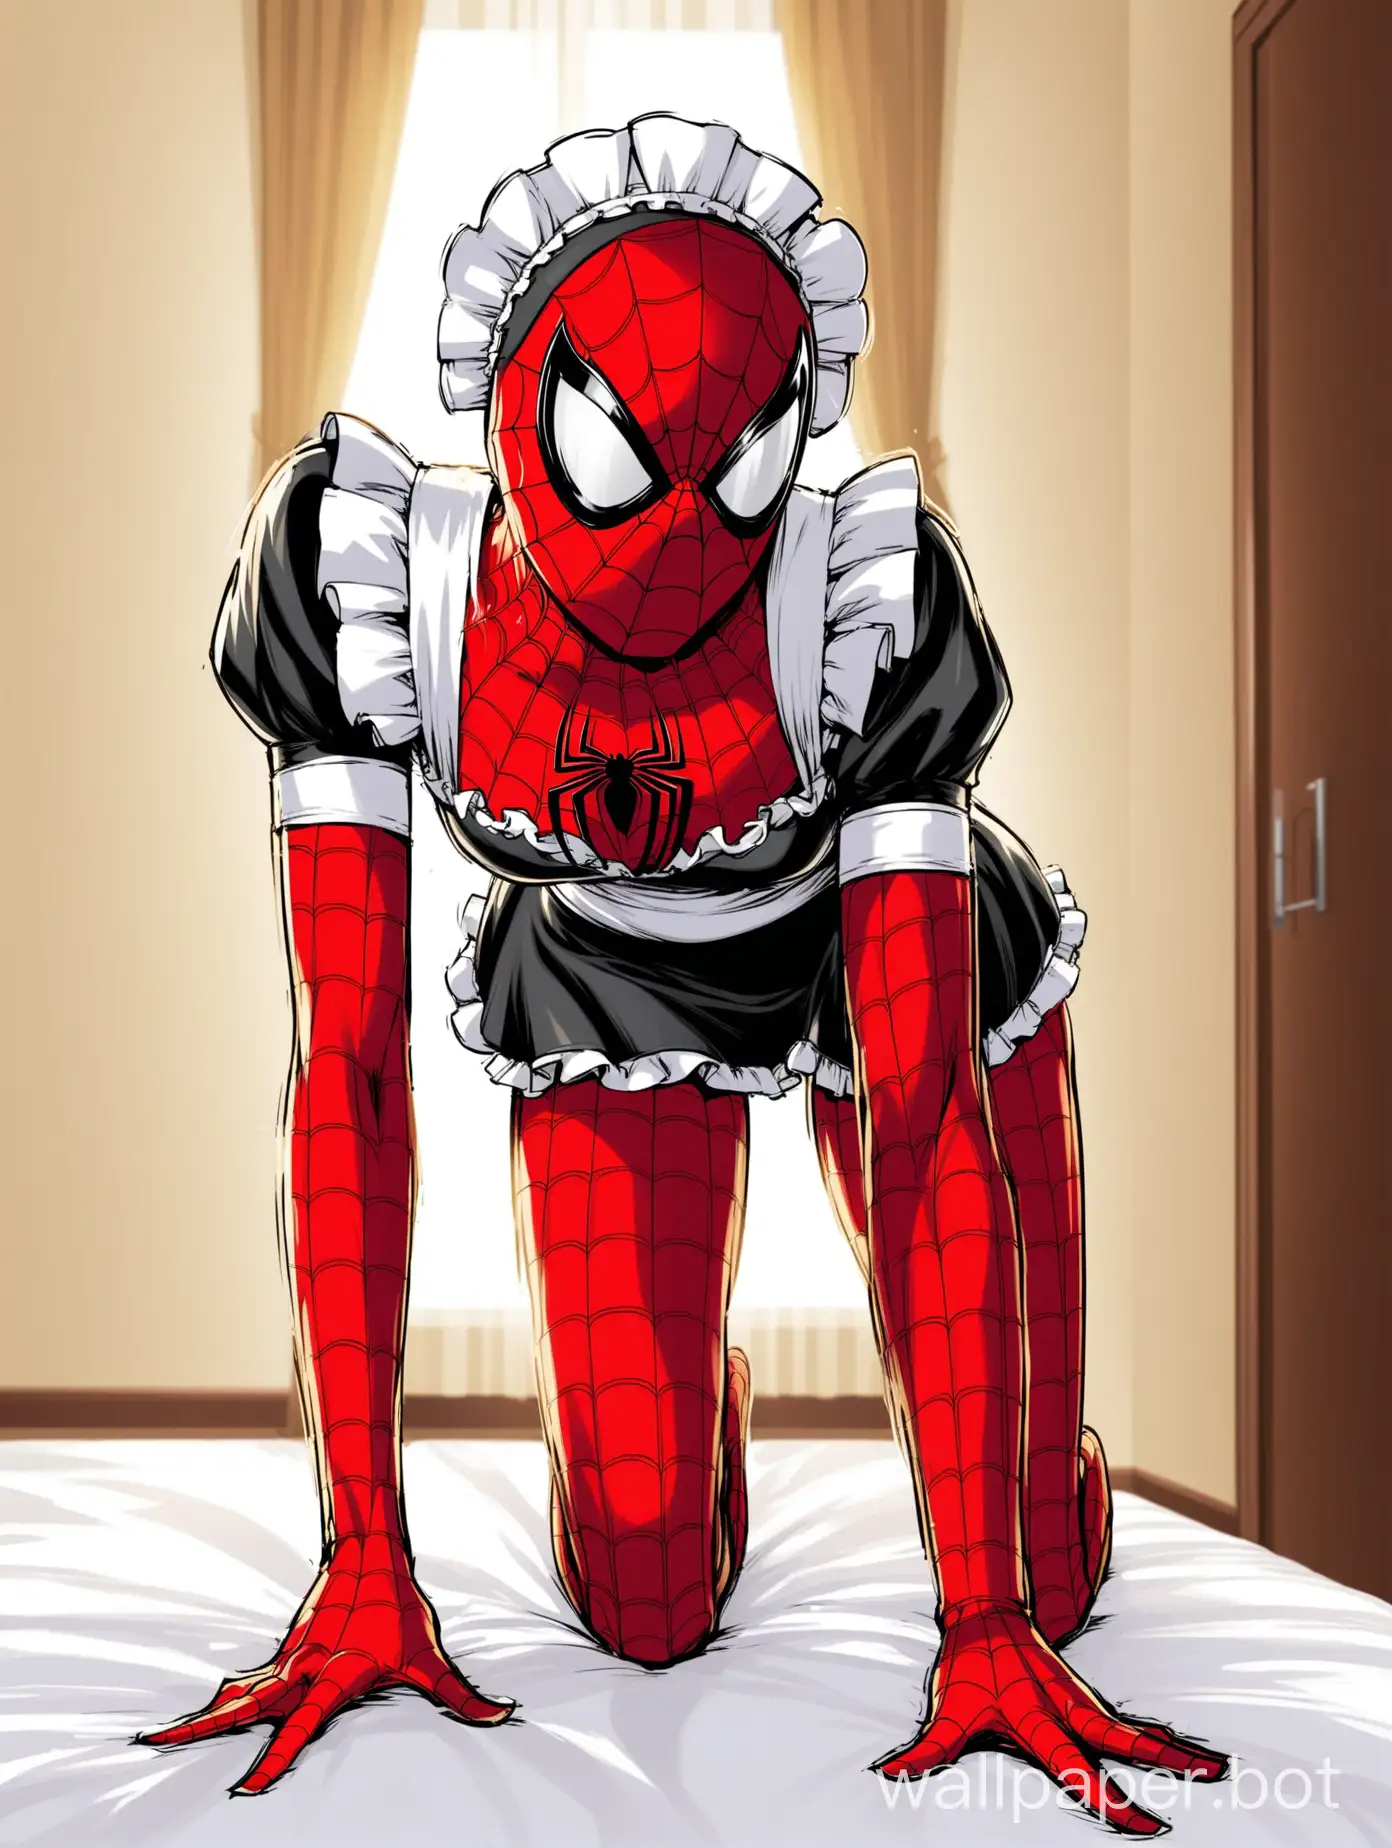 SpiderMan-in-Maid-Costume-Playful-Superhero-Cosplay-Art